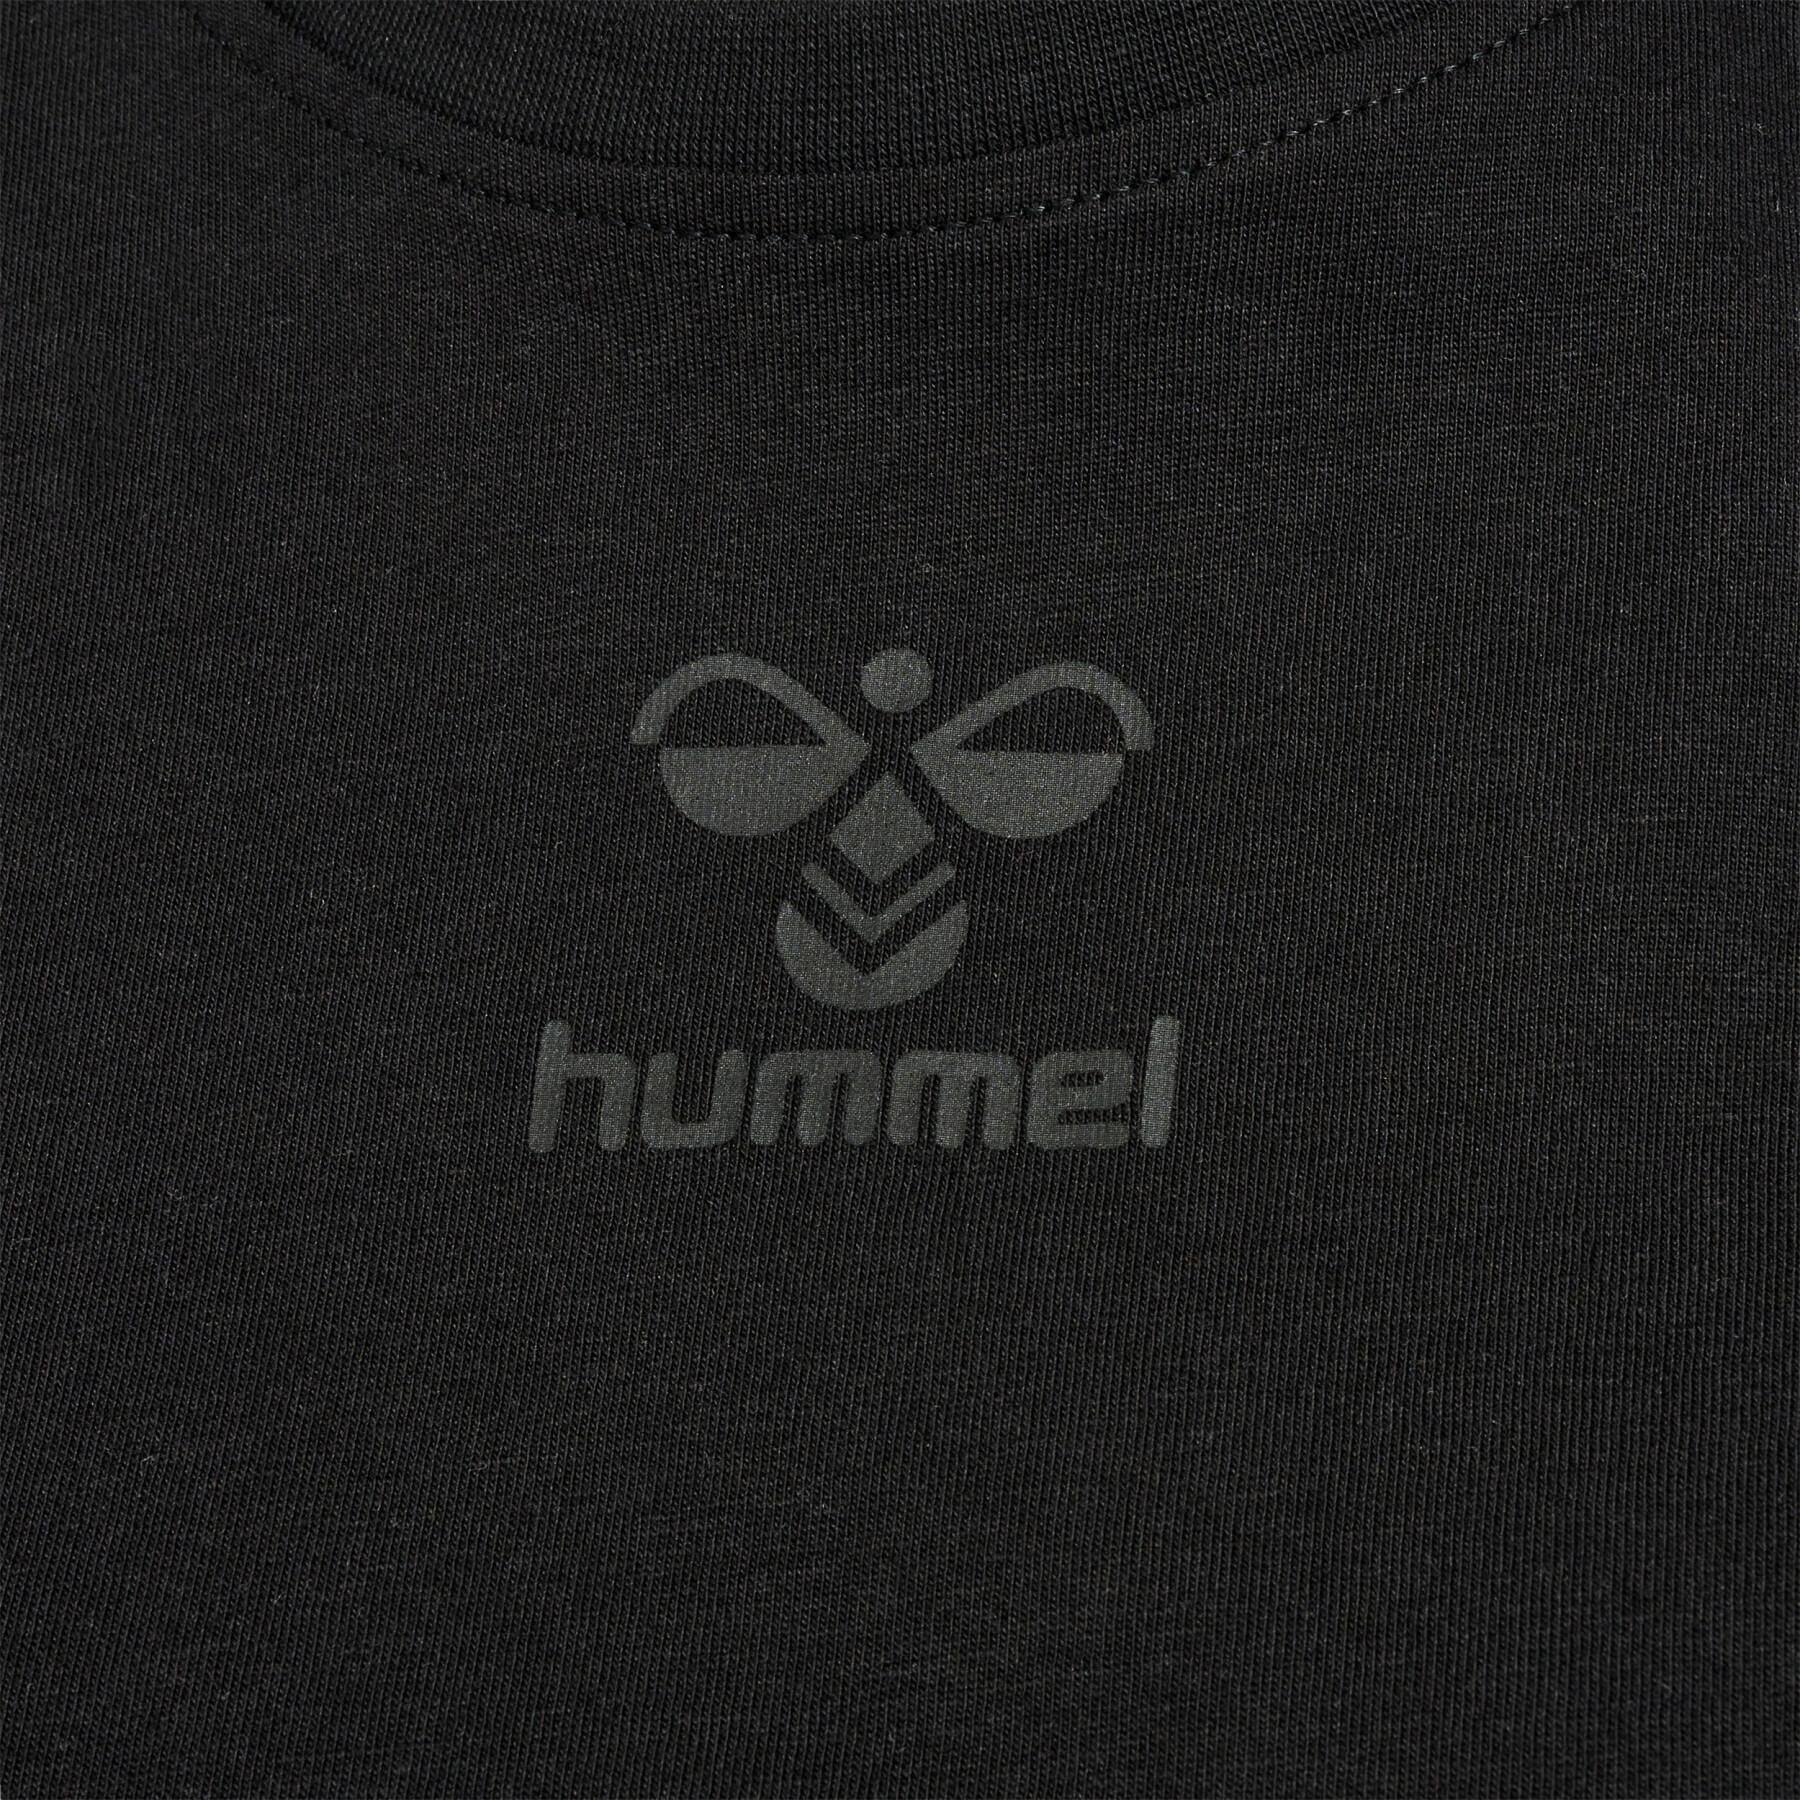 Women\'s T-shirt Hummel Icons - Hummel - Brands - Lifestyle